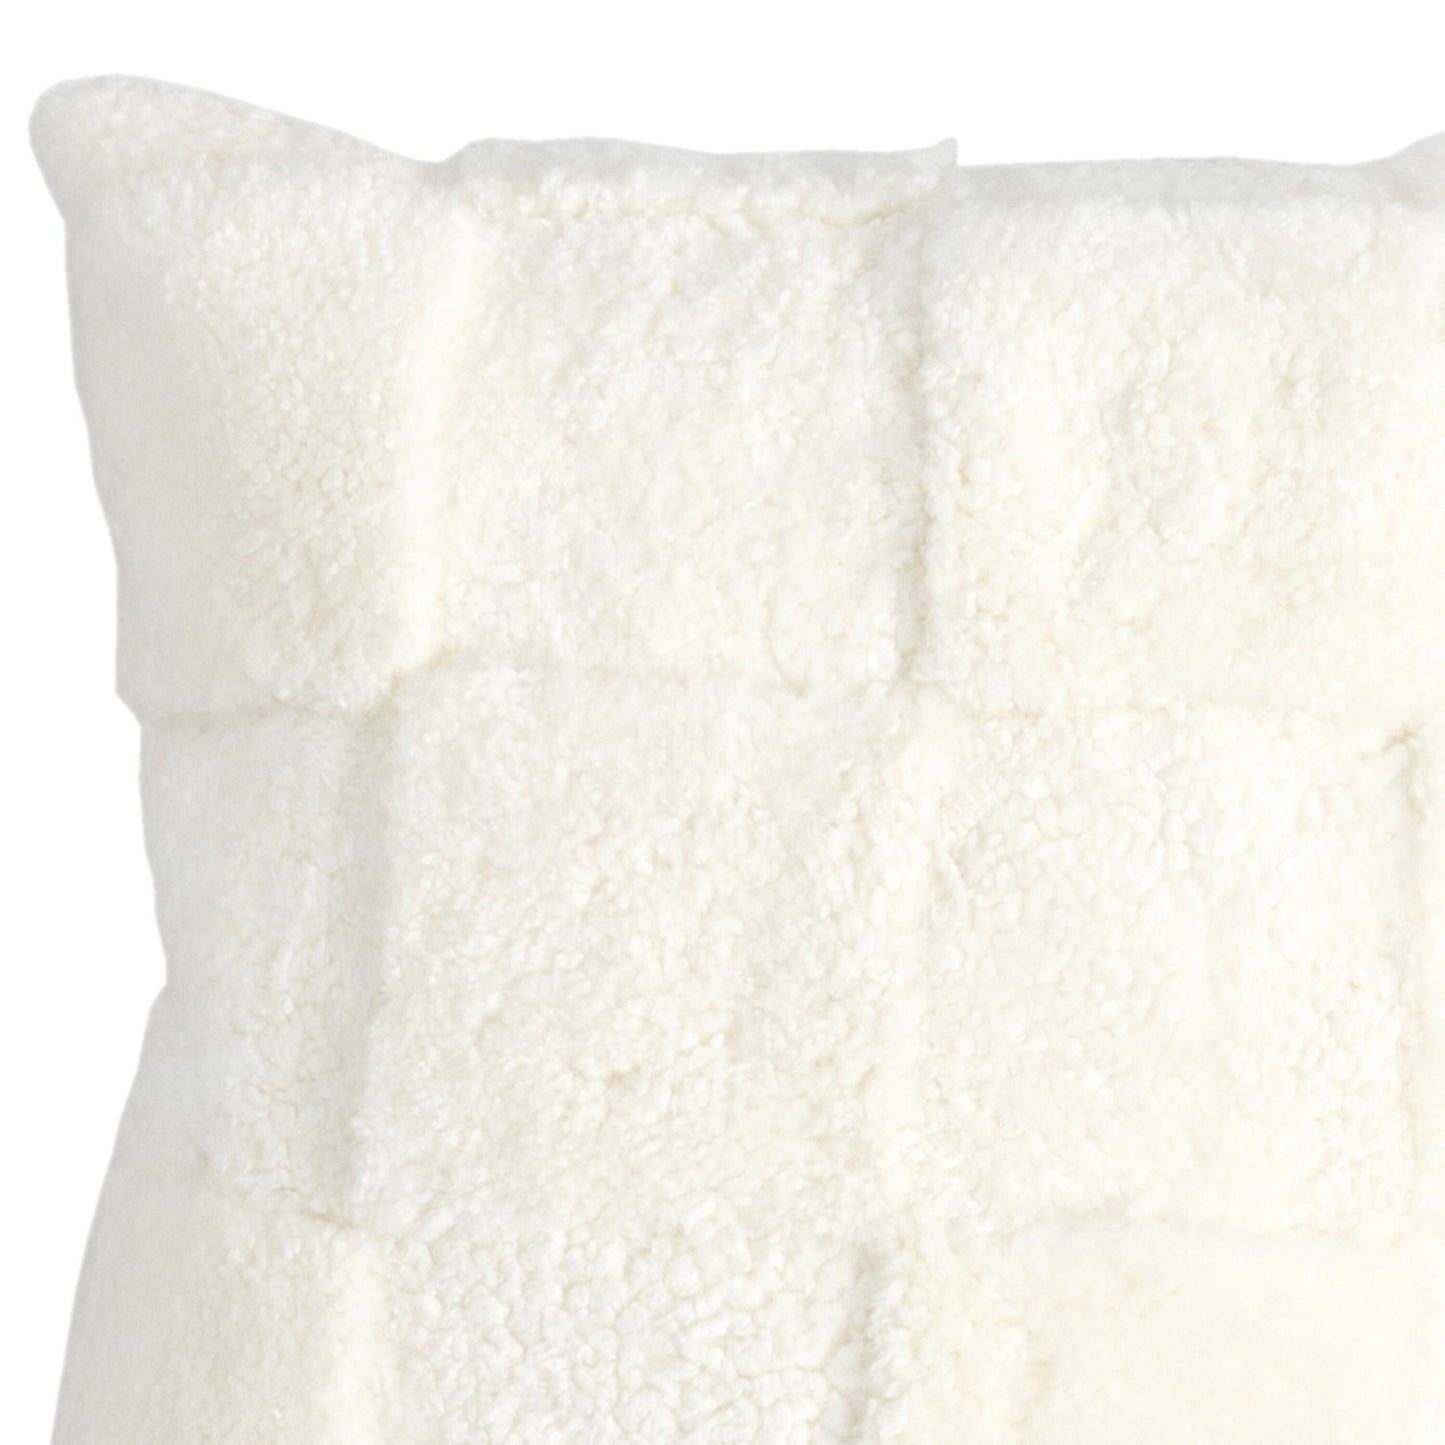 Patchwork shearing pillow-cream-20x20